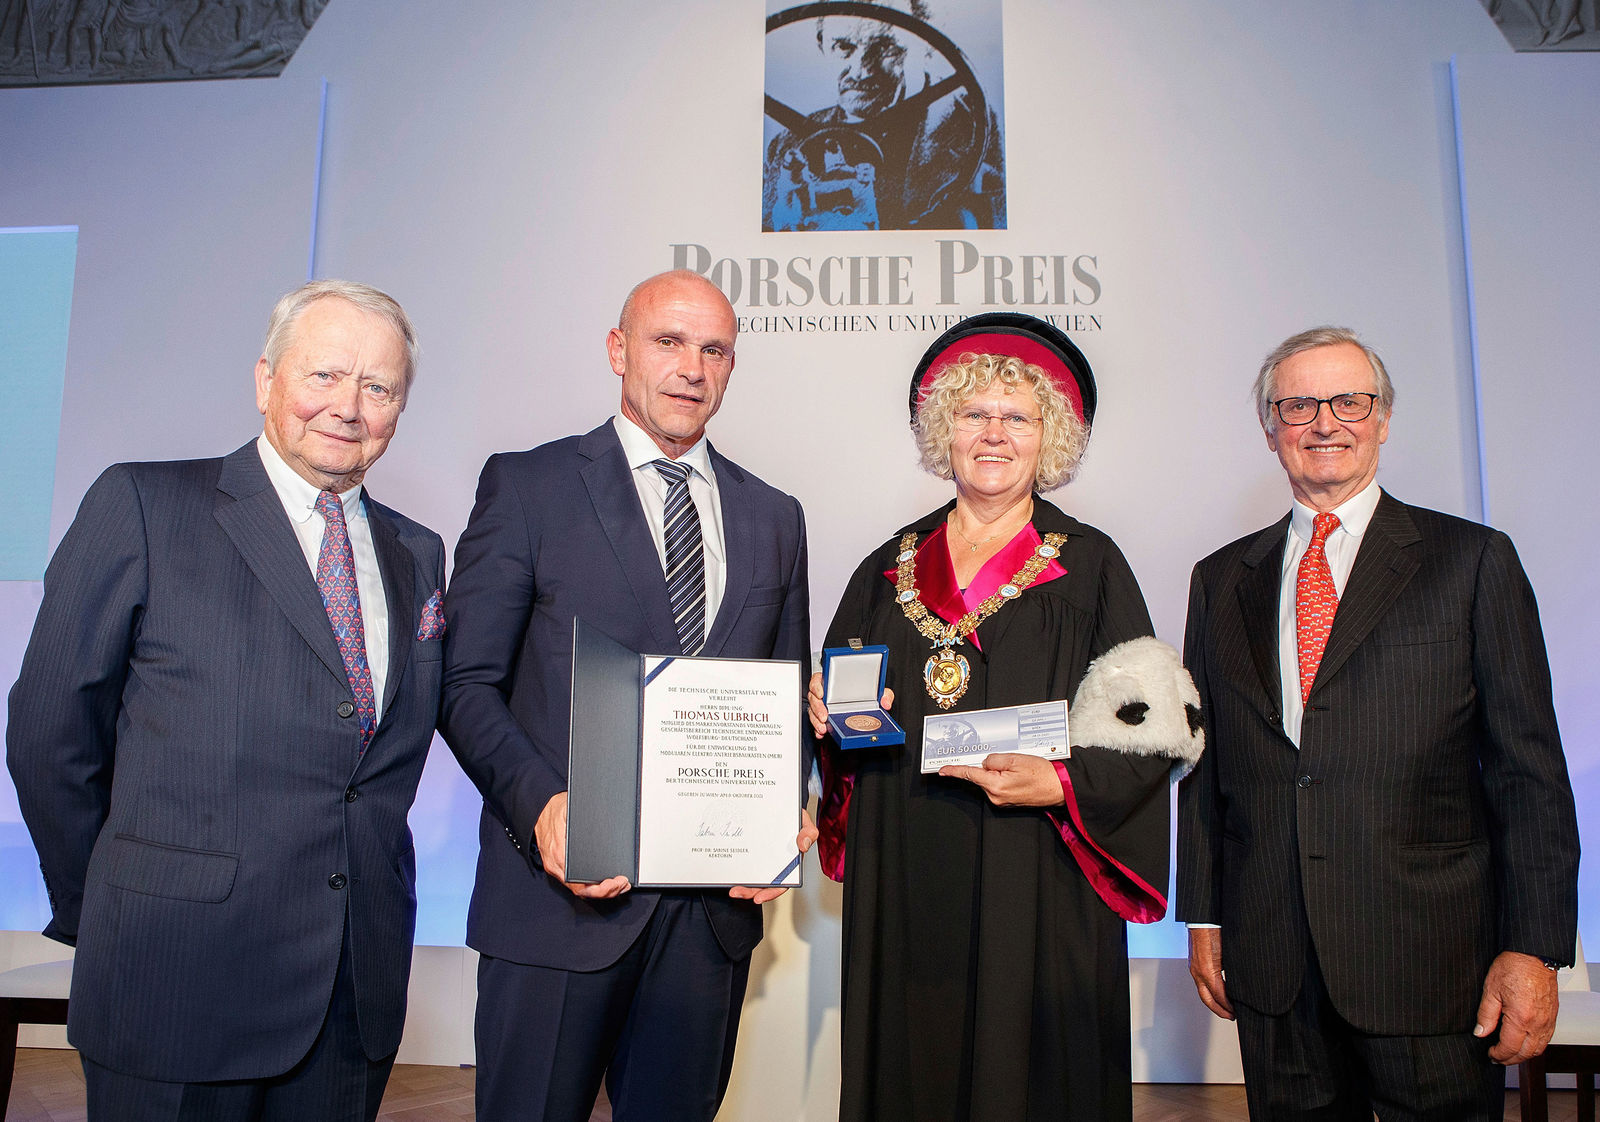 Award-winning! – Volkswagen’s electric platform wins renowned TU Wien prize